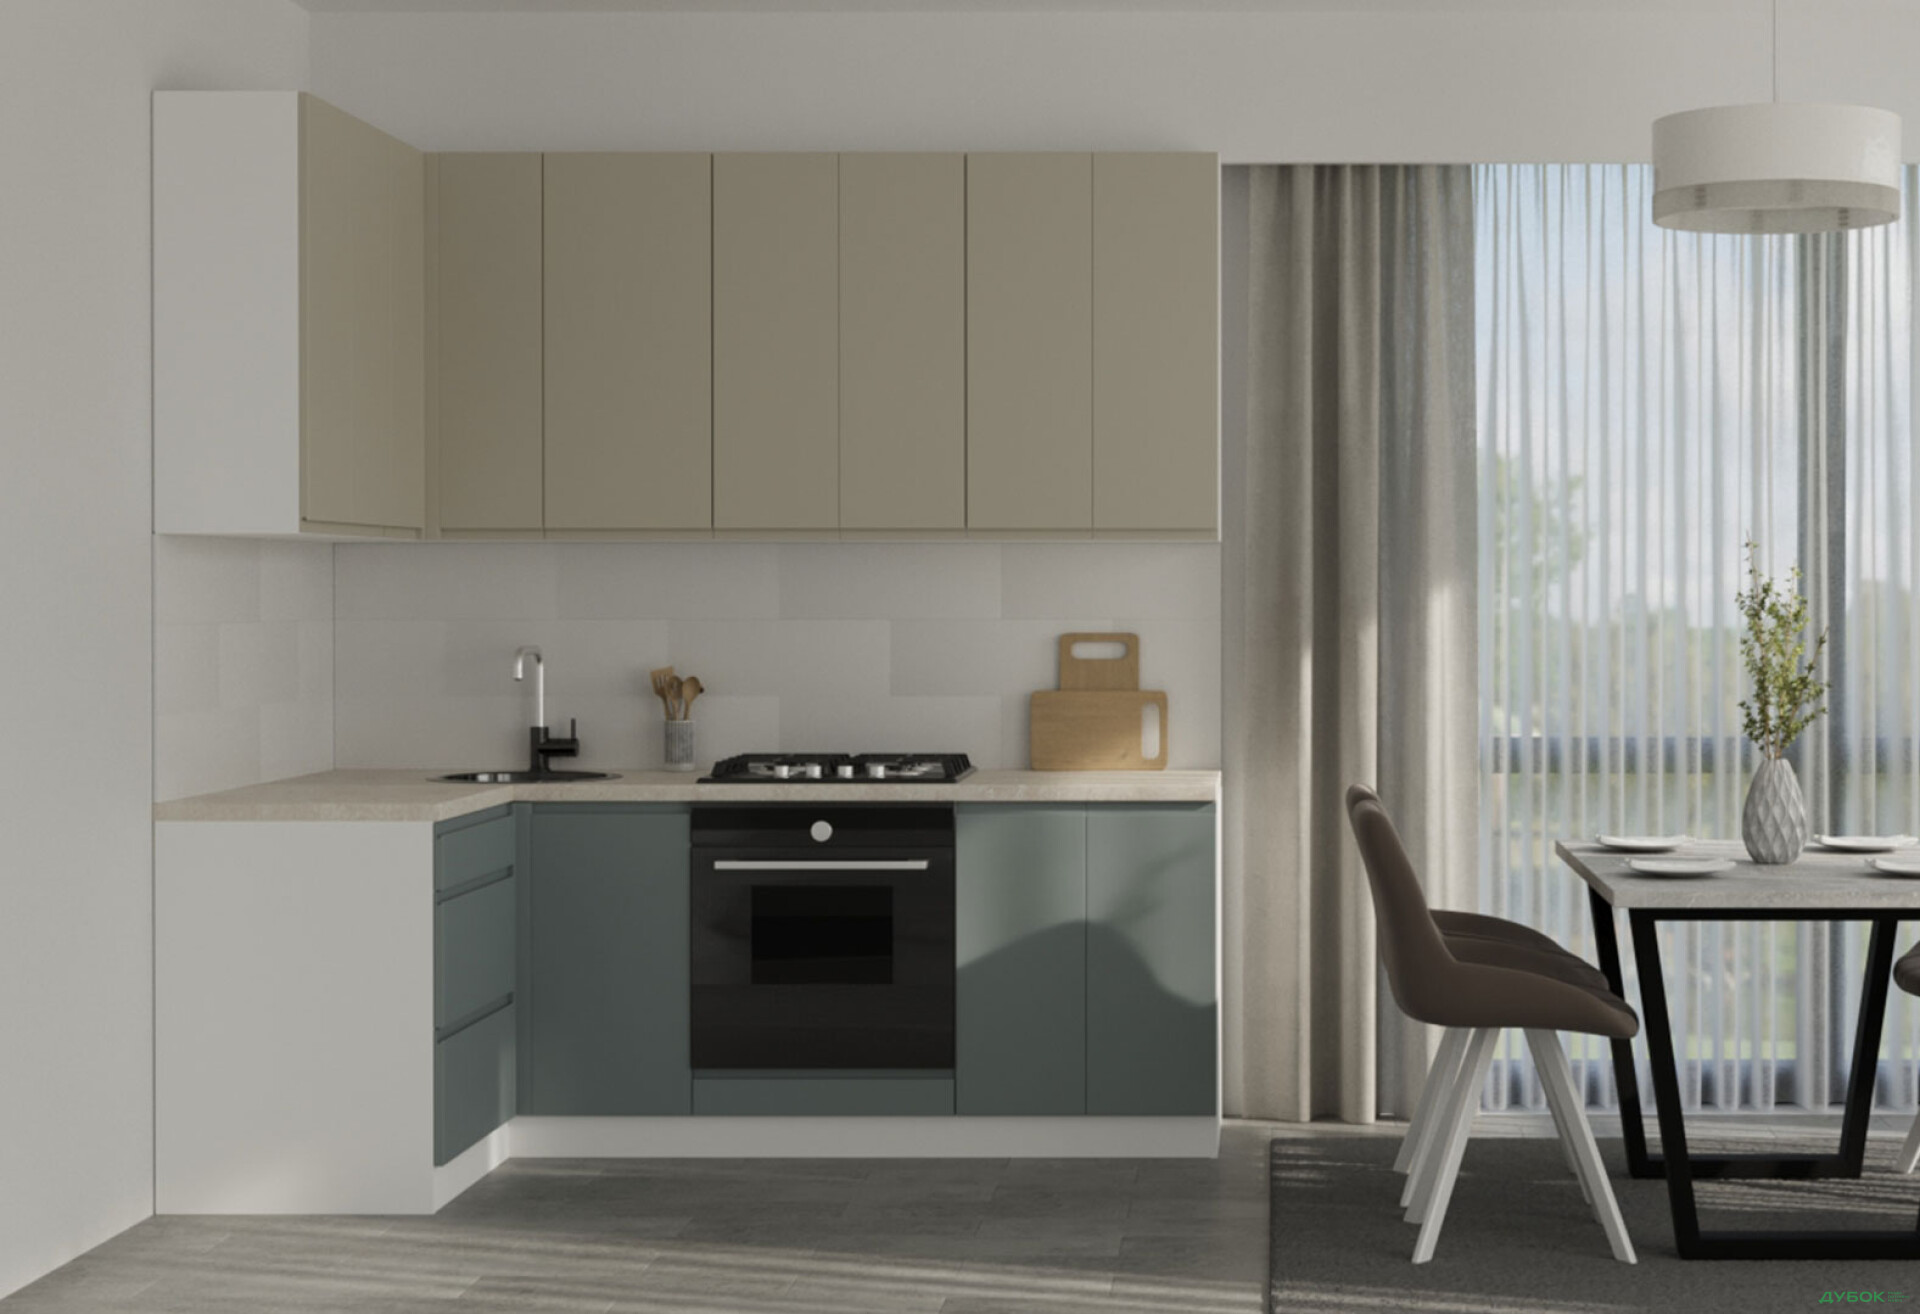 Фото 1 - Кухня Вип-Мастер Интерно Люкс / Interno Luxe 2.2x1.2 м, белый / беж, серый мат